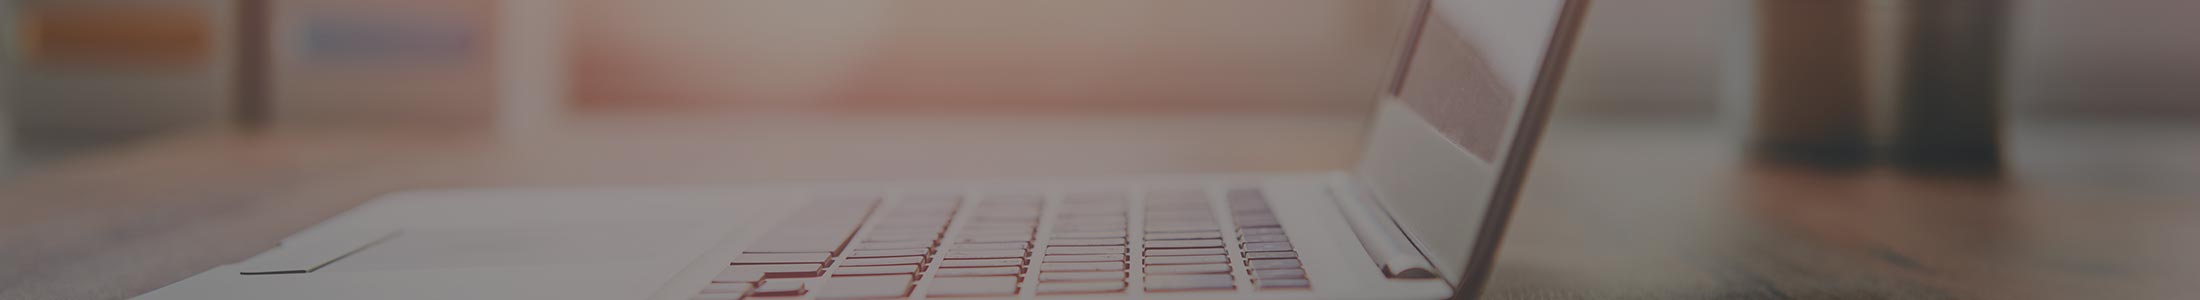 image of laptop pc on desk